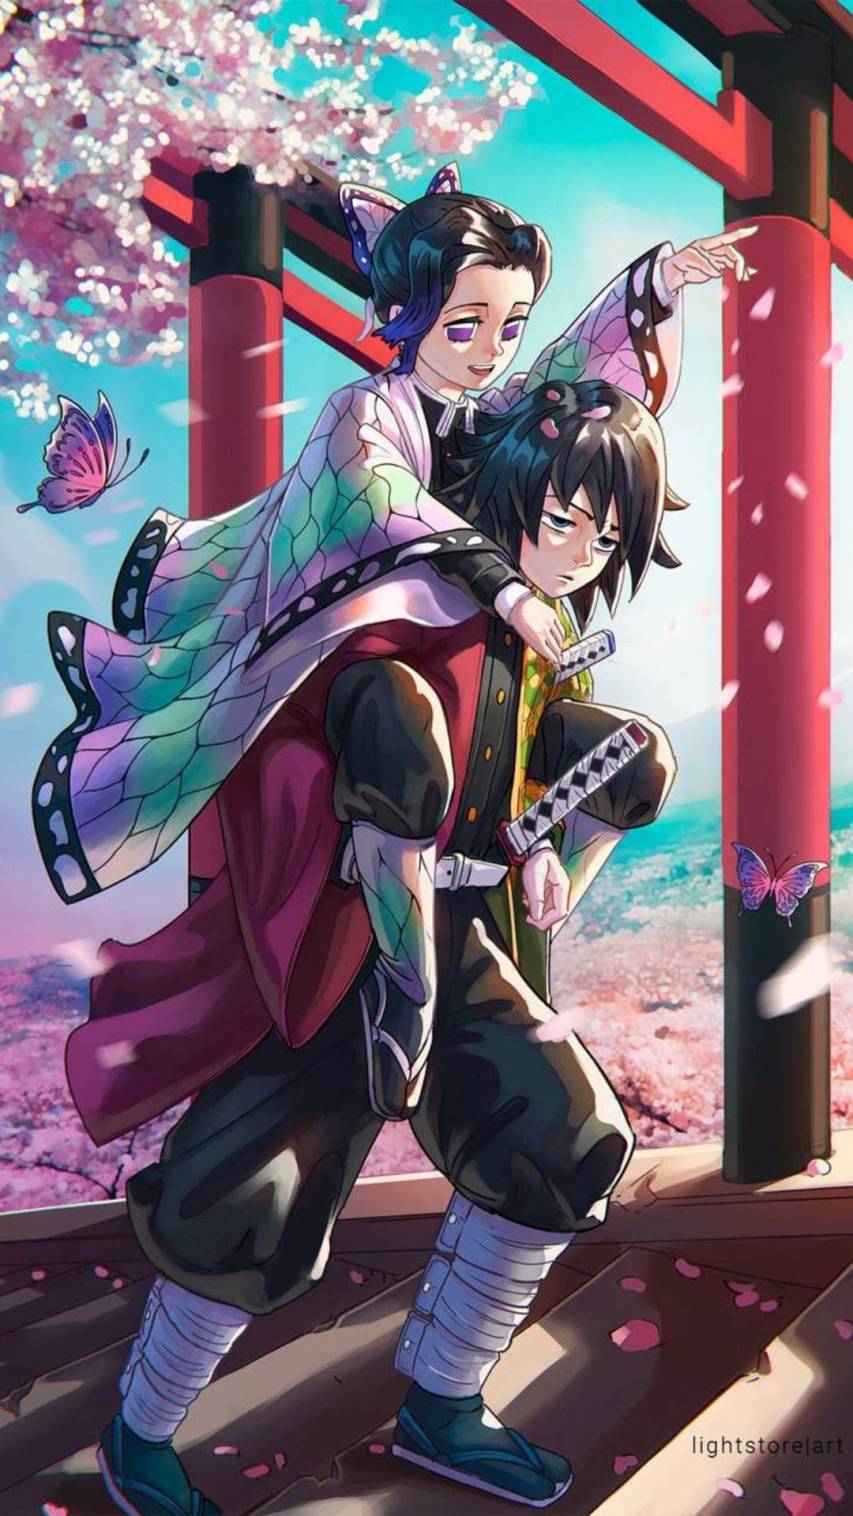 Anime Wallpapers on X Tanjiro and Nezuko Demon Slayer 1080x2400  Post httpstcoW8A69xwea8 wallpaper anime animewallpaper  httpstcom7lWlMXCE9  X